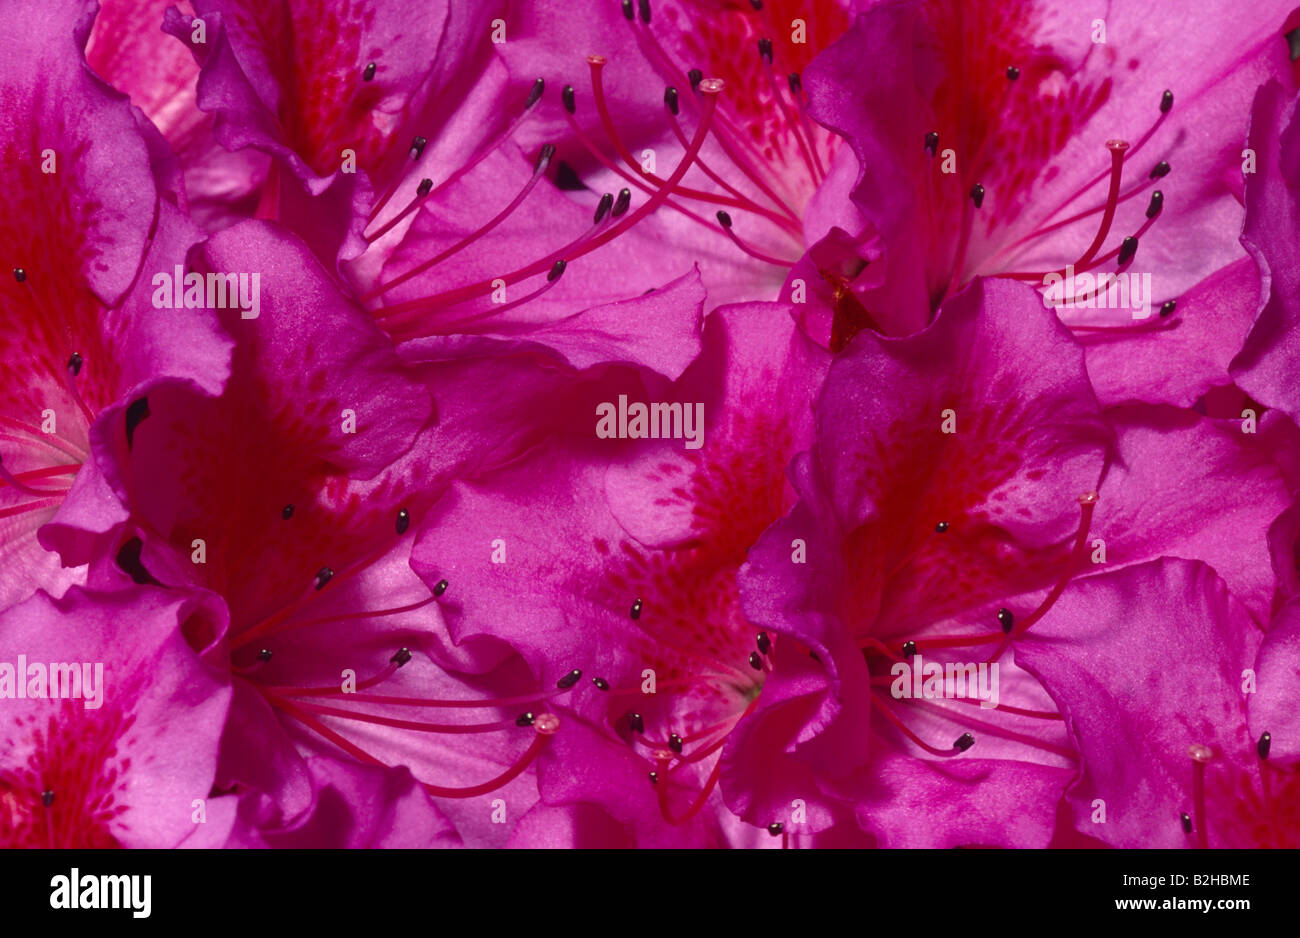 Azaleas flowering shrub afterimage backcloth background image backdrop close up pattern still patterns stills Stock Photo